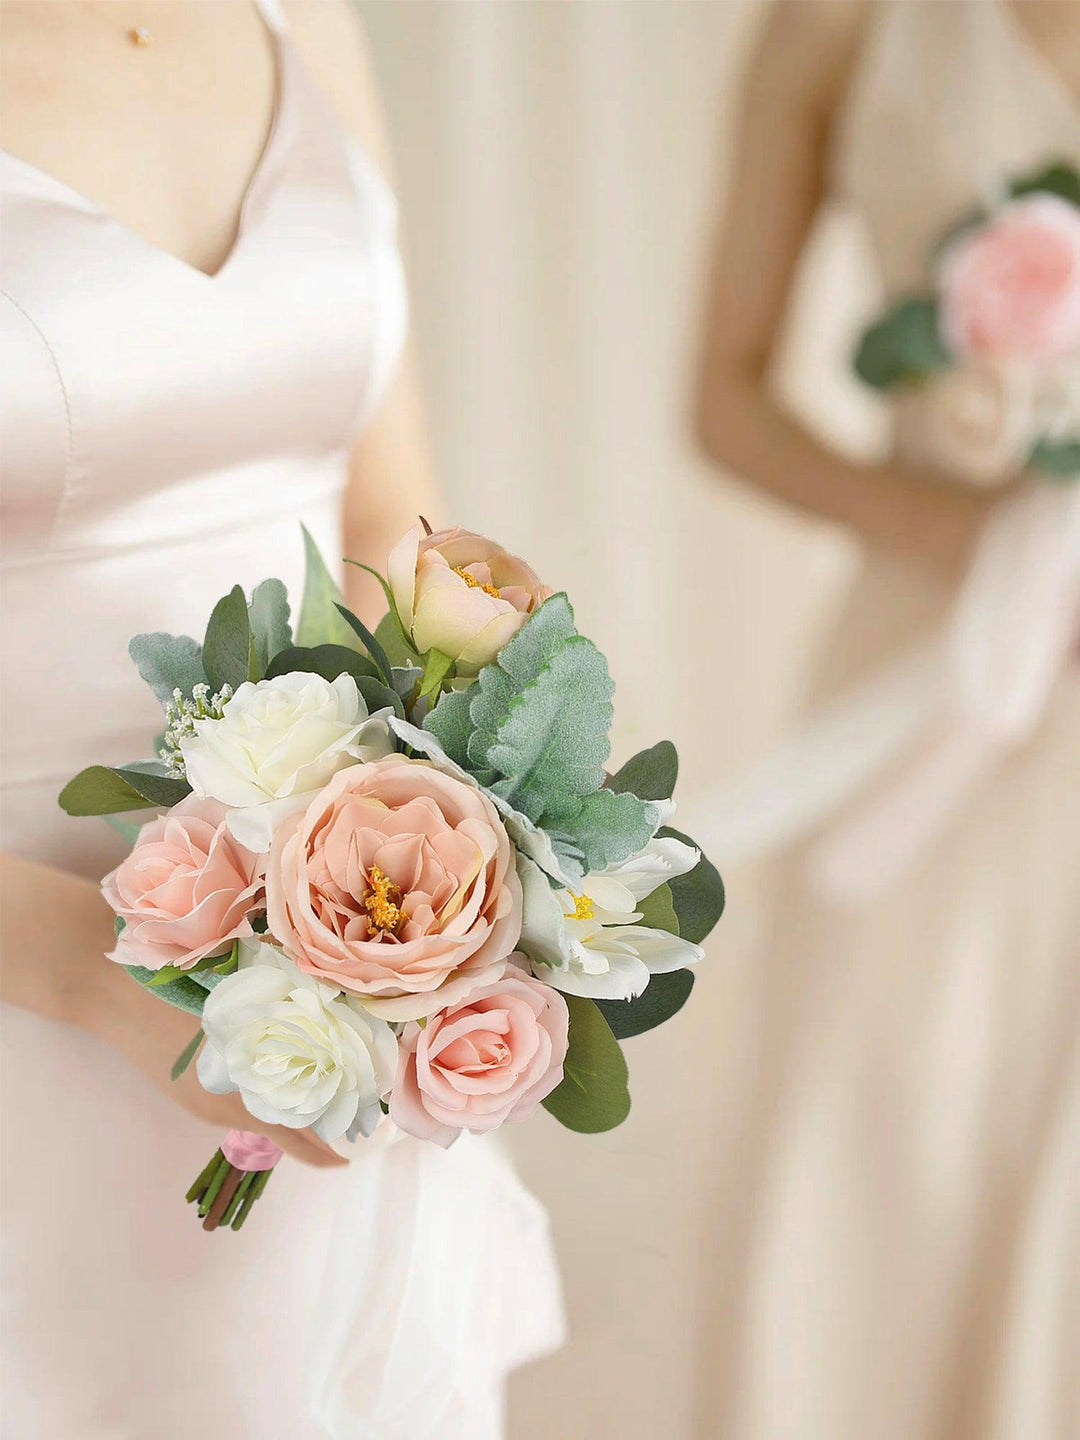 7 inch wide Blush Pink & White Bridesmaid Bouquet